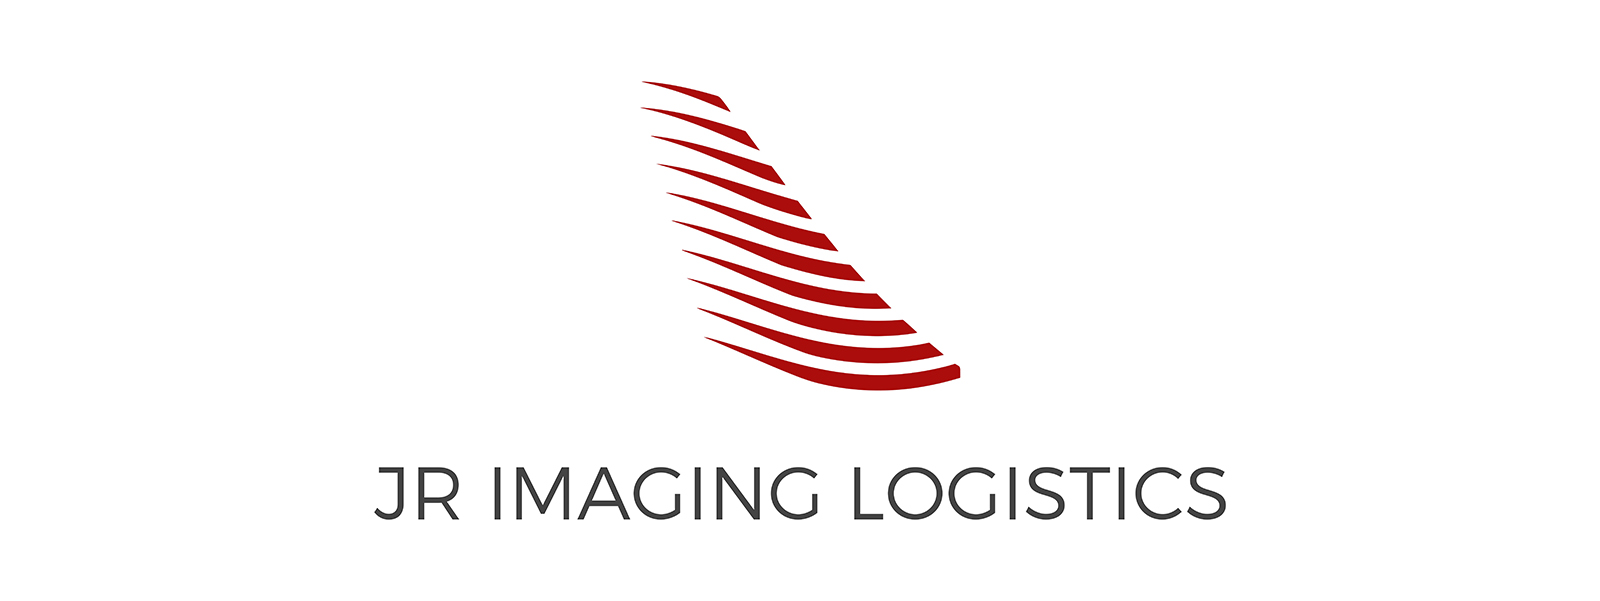 logos-JR Imaging Logistics_2